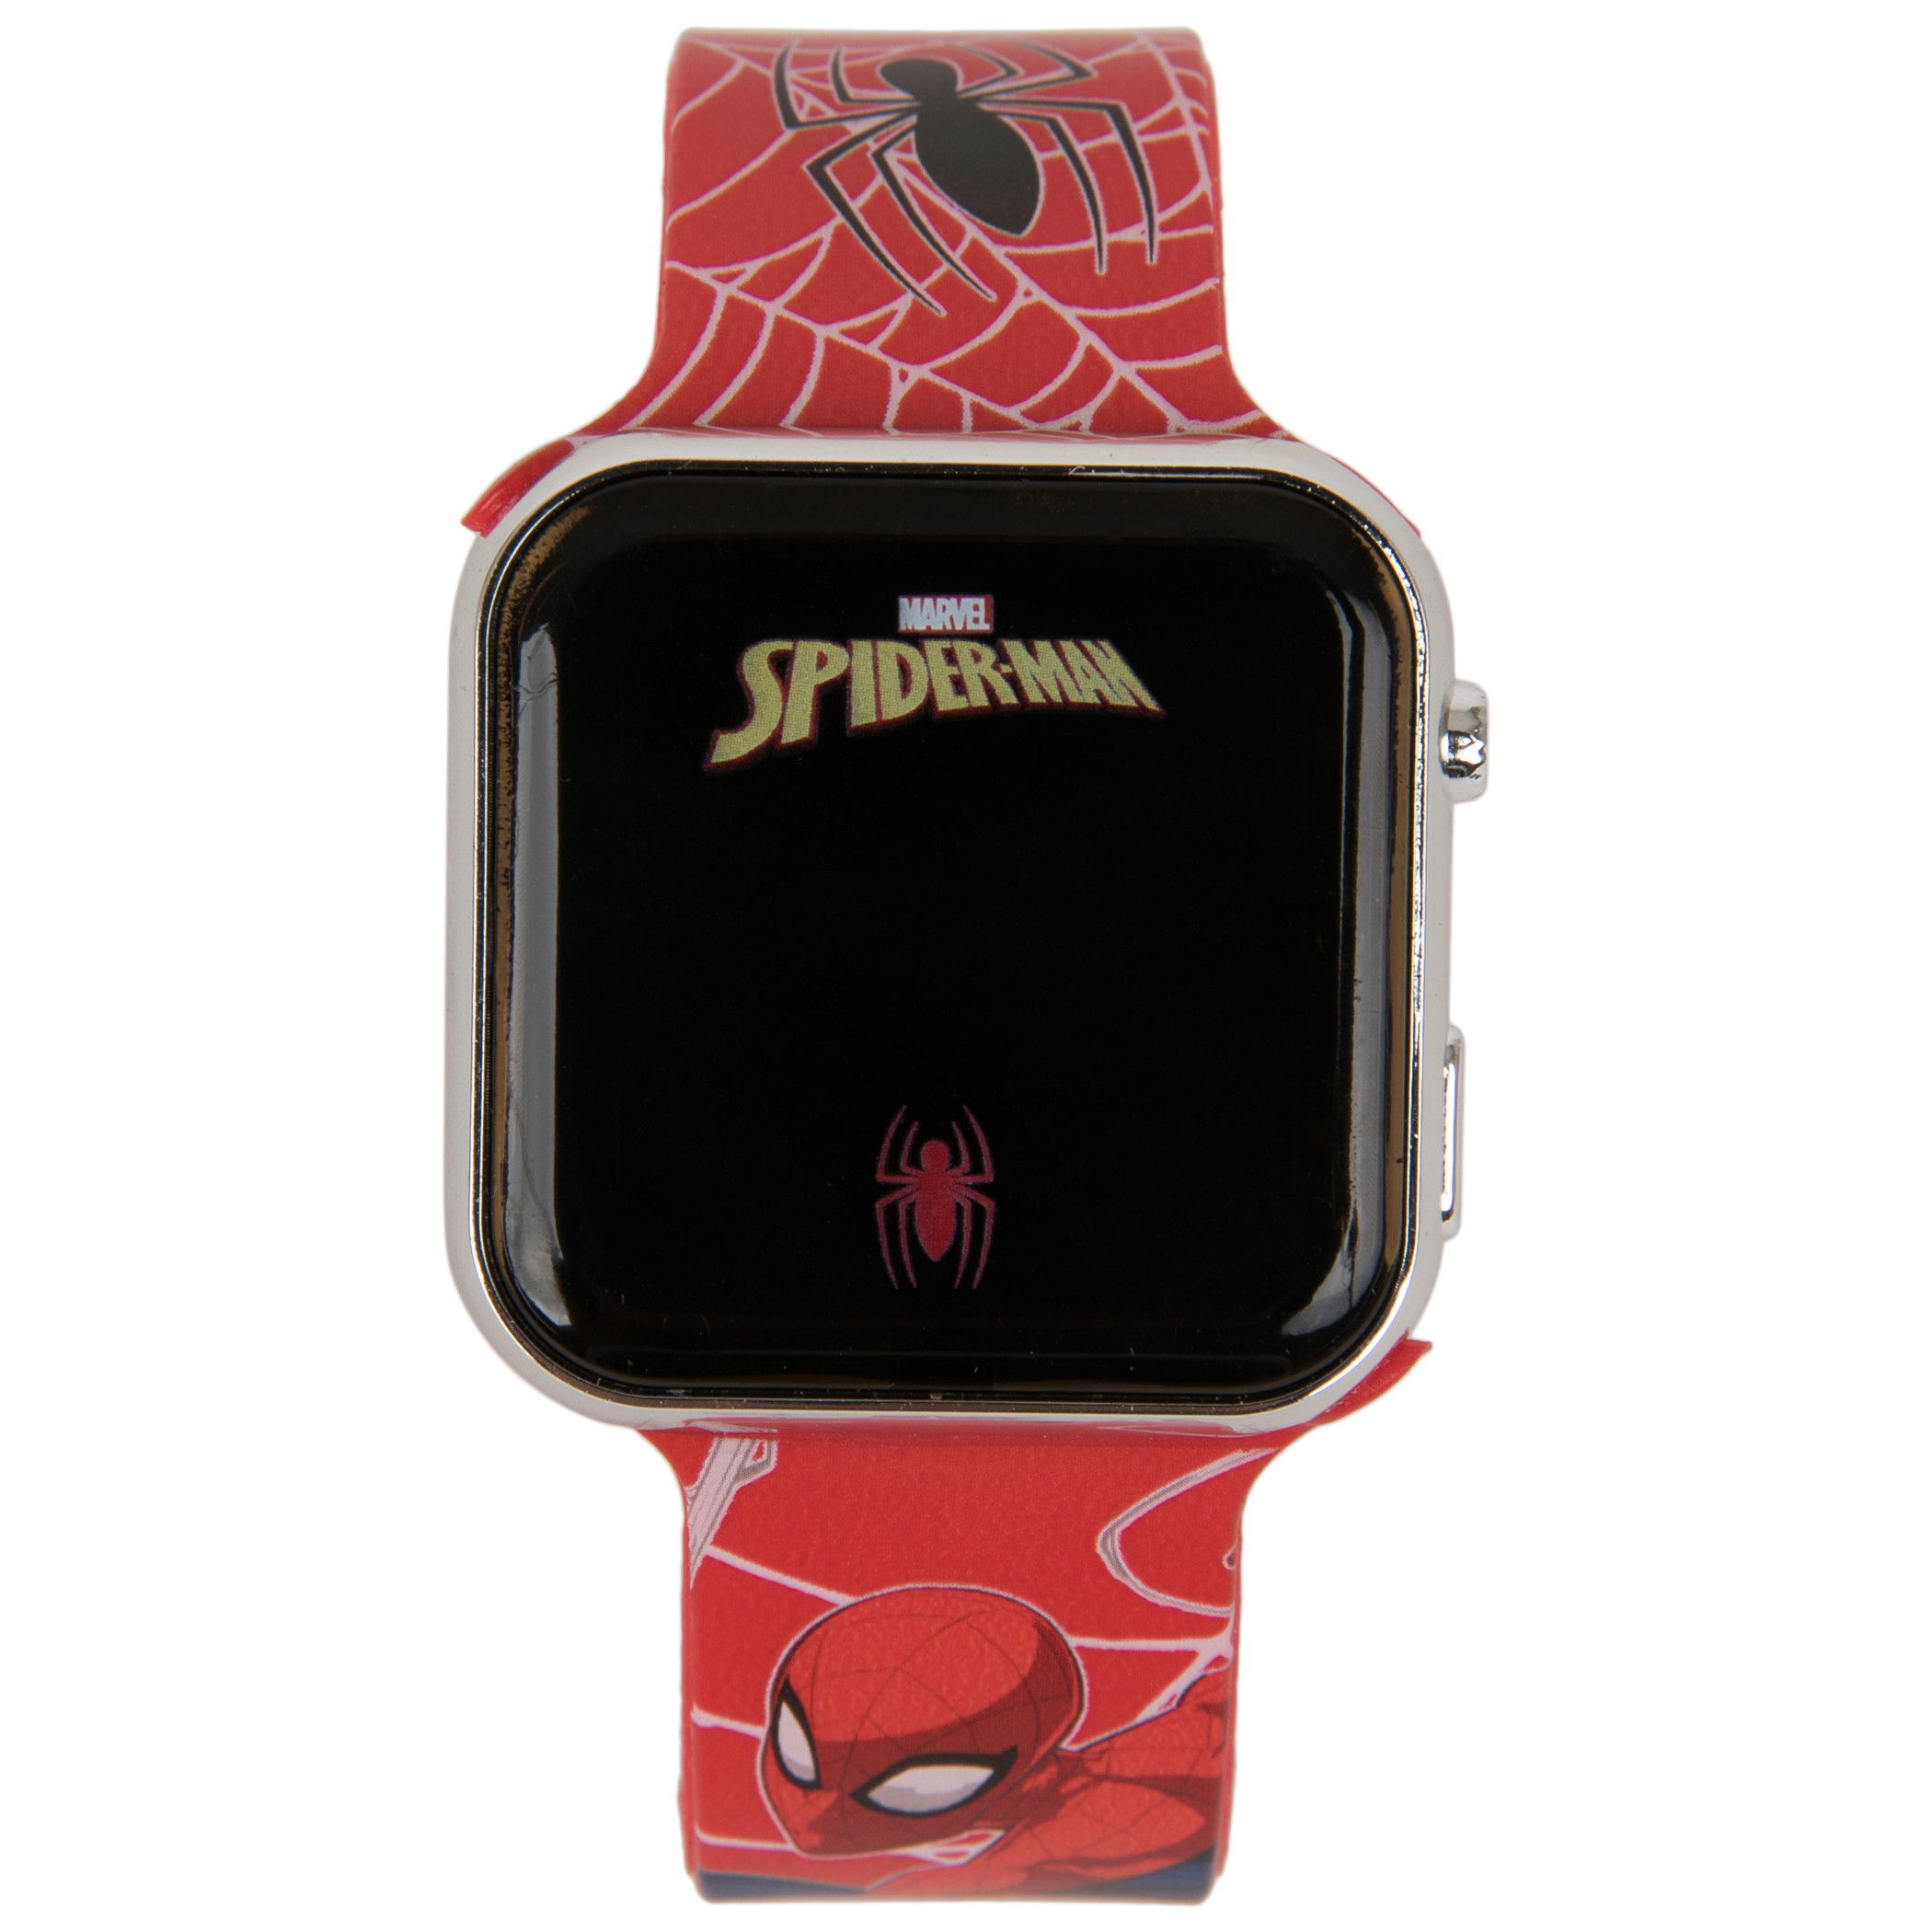 Spider-Man Web Design LED Screen Wrist Watch